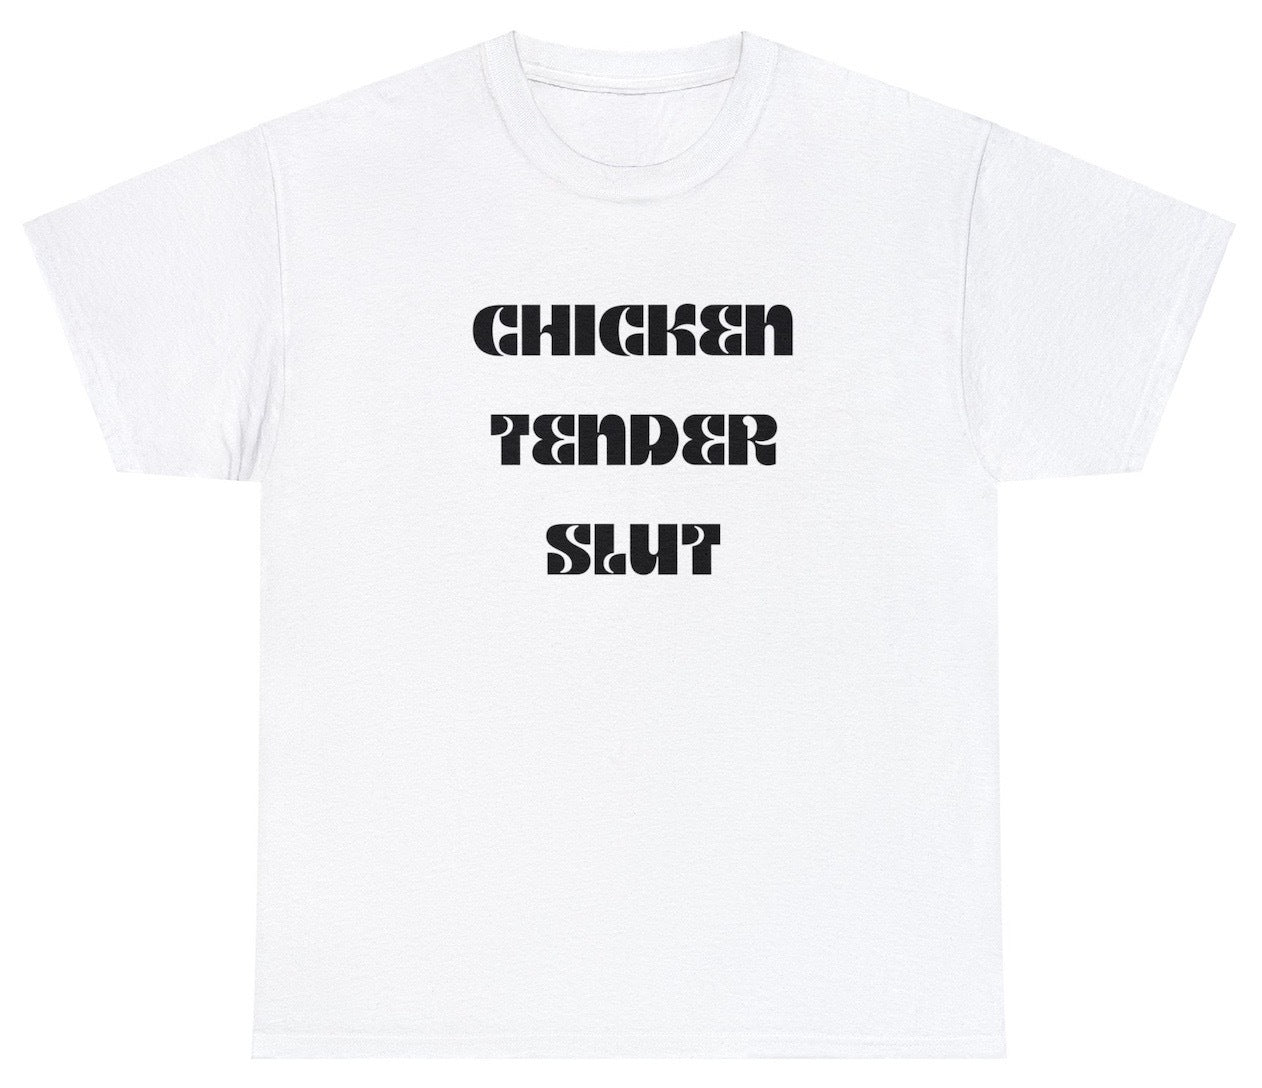 AAA Chicken Tender Slut T Shirt